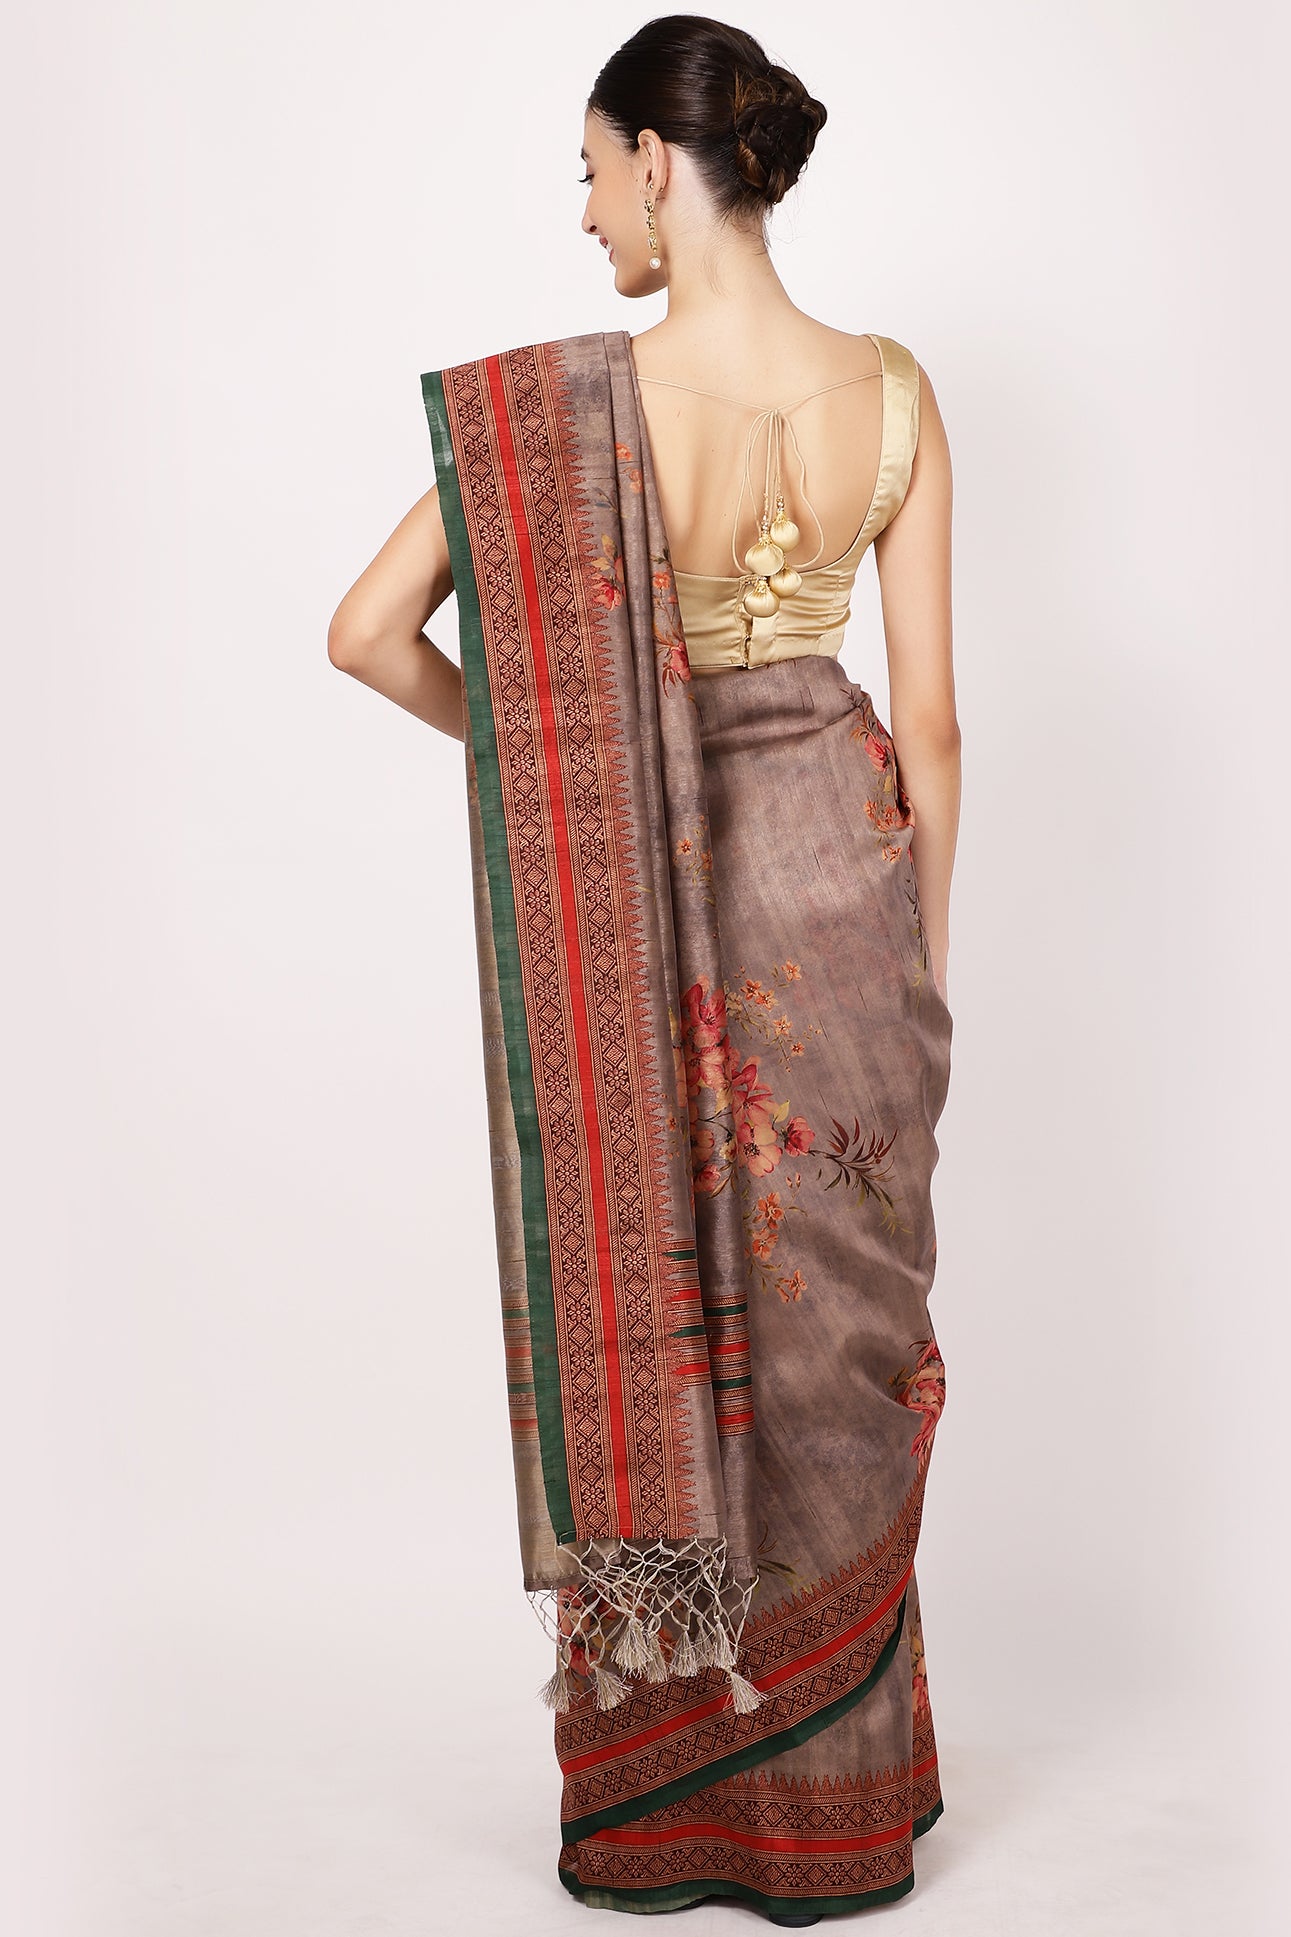 Brown Colour Printed Tussar Silk Saree.